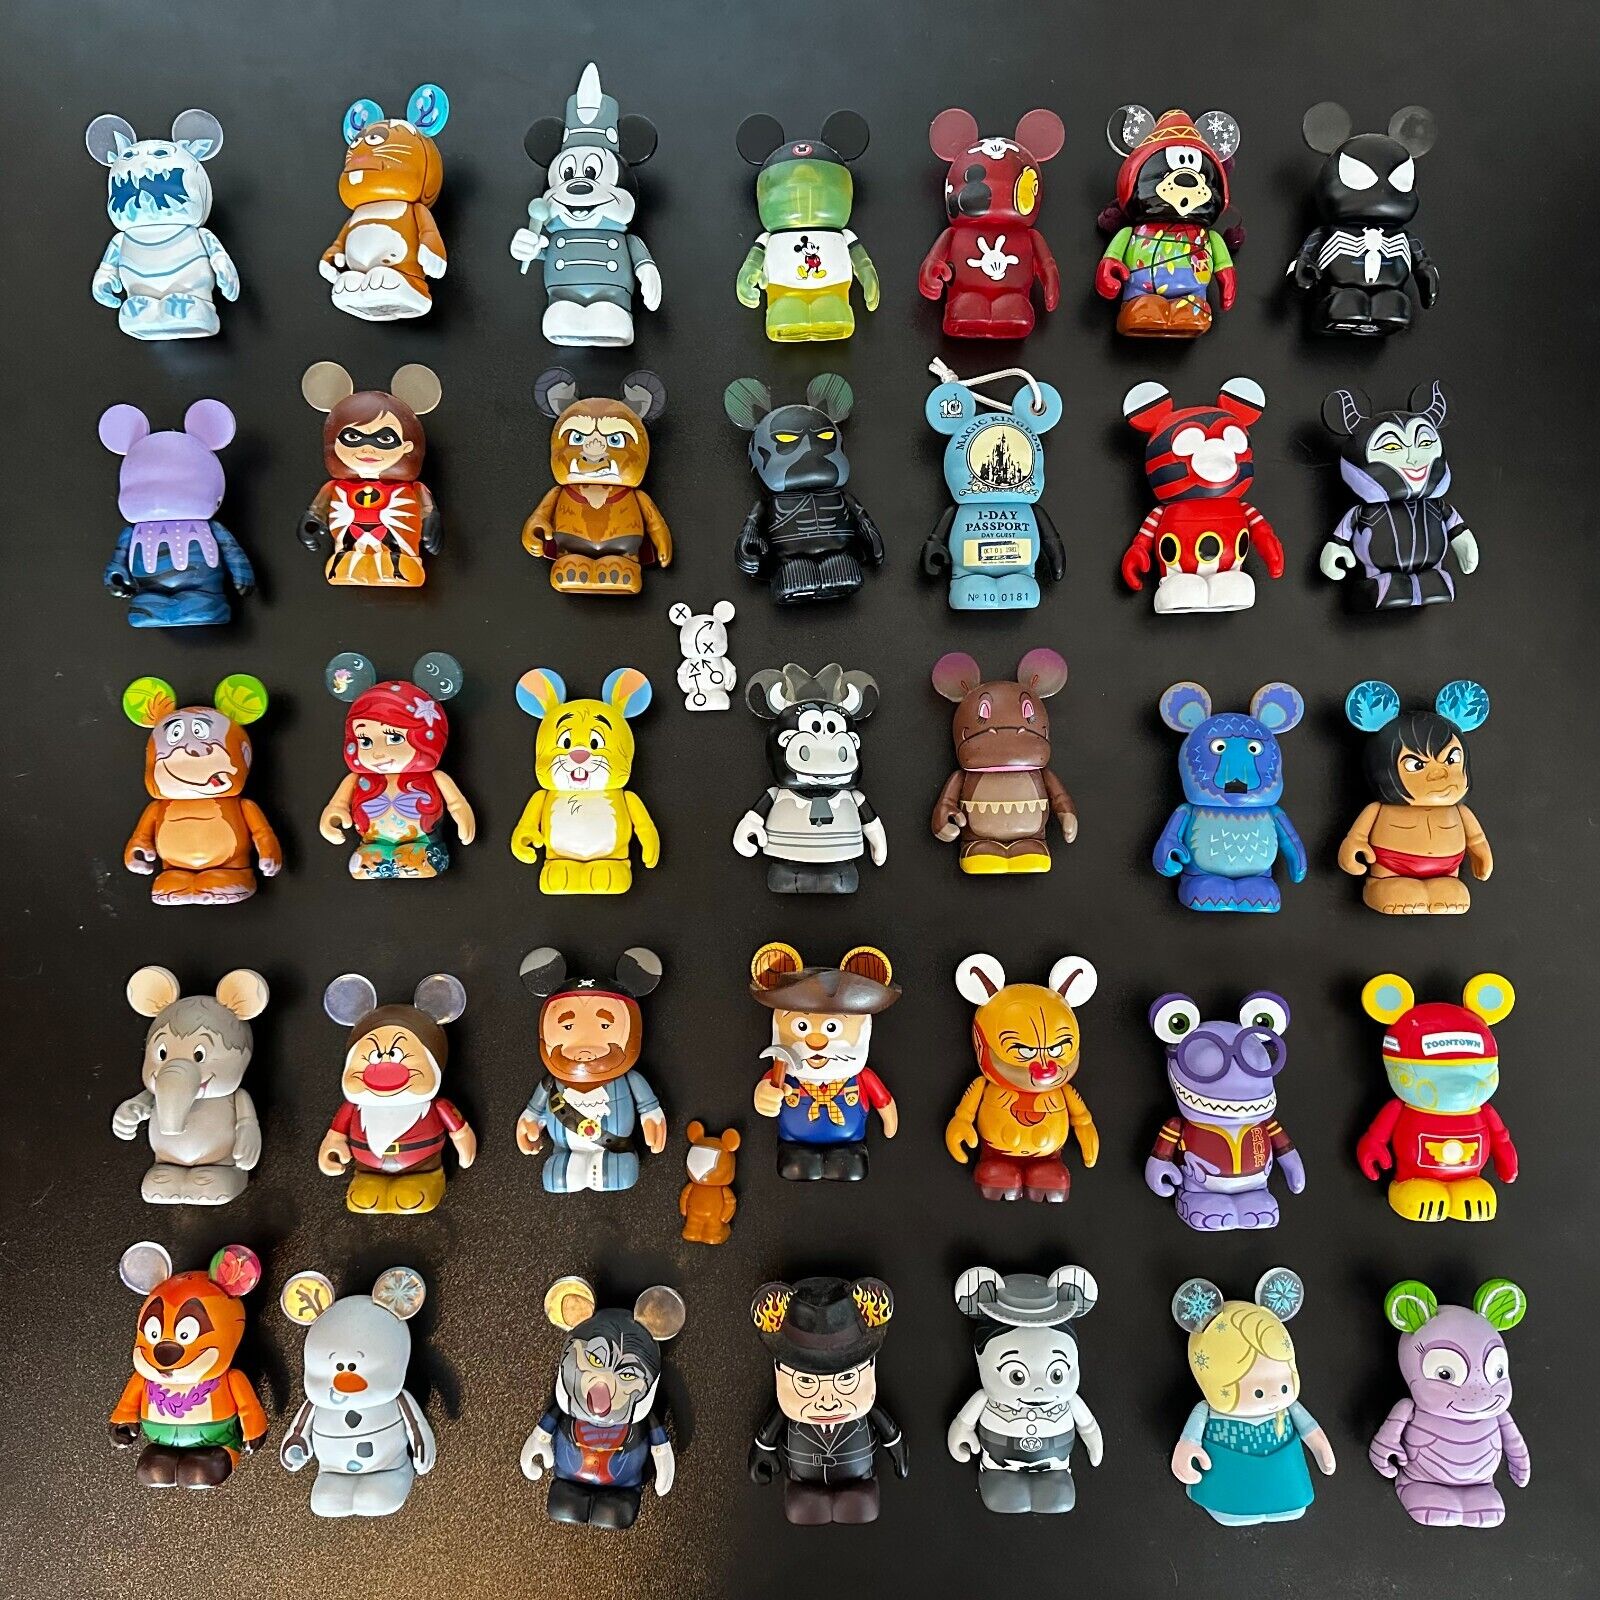 Disney Vinylmation Lot of 35 Figures (3 inches) + 2 Minis (Parks & Pixar+)